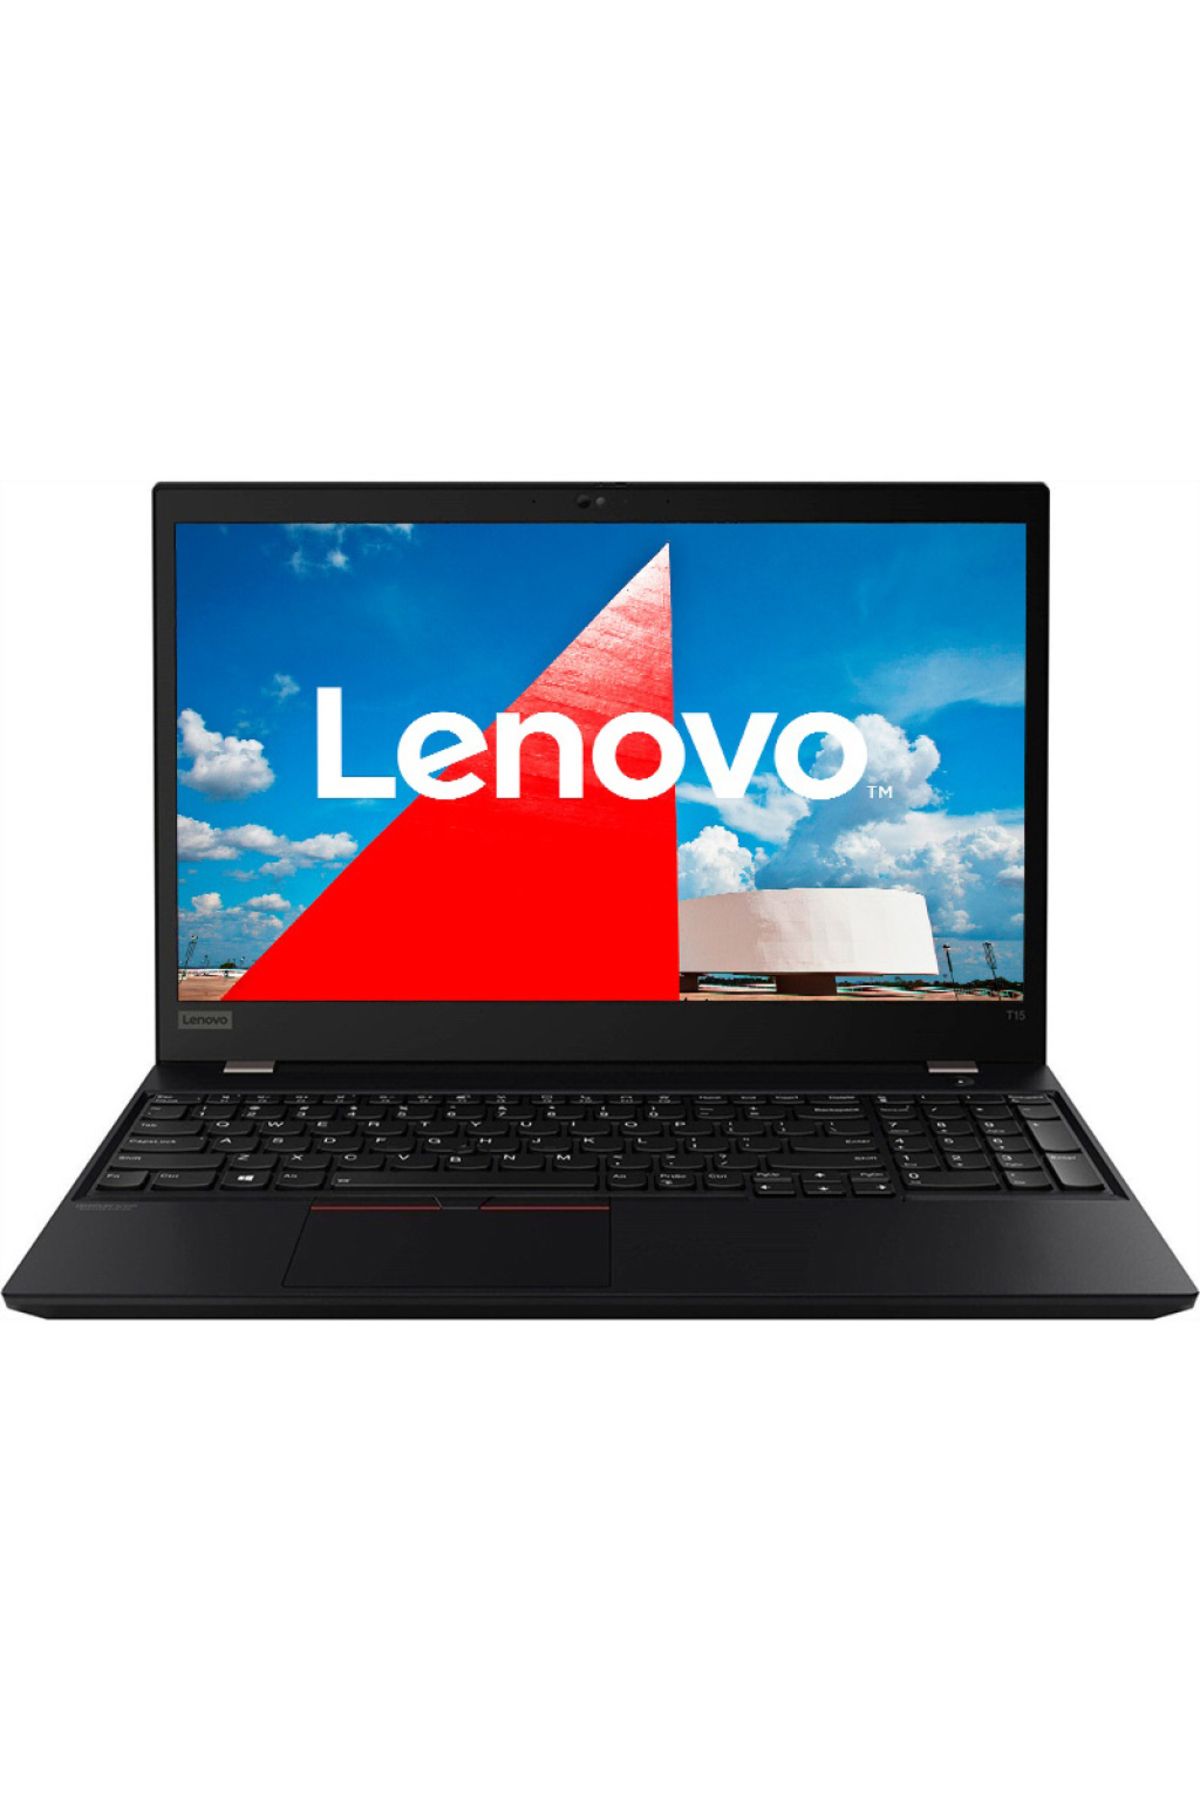 LENOVO E540 i5 4200M 8GB RAM 256GB SSD 15.6 inç Laptop Dizüstü Bilgisayar